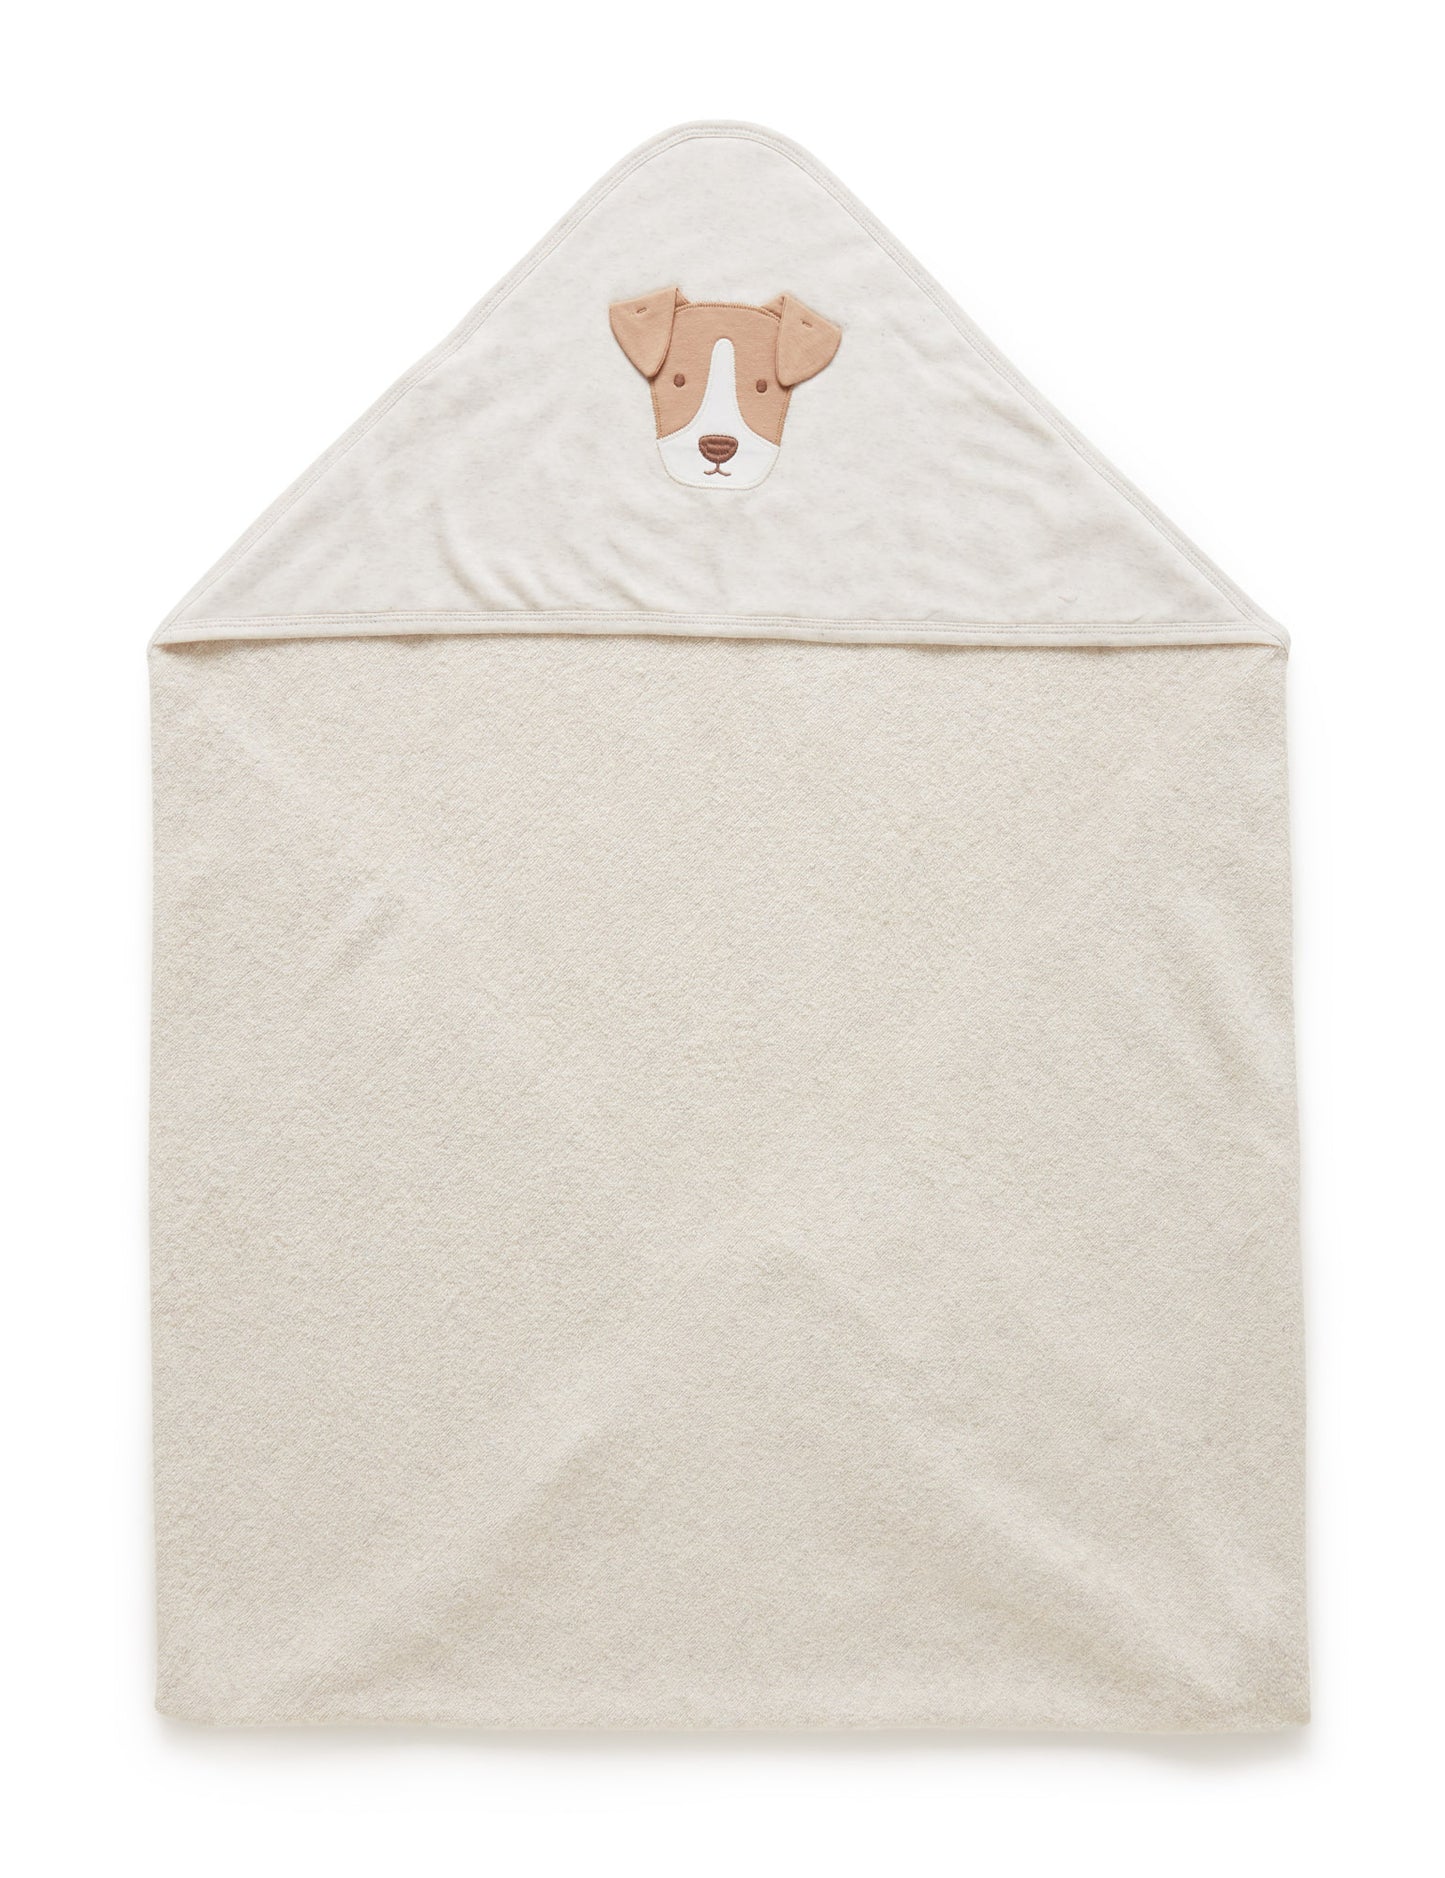 Purebaby Purebaby Hooded Puppy Towel